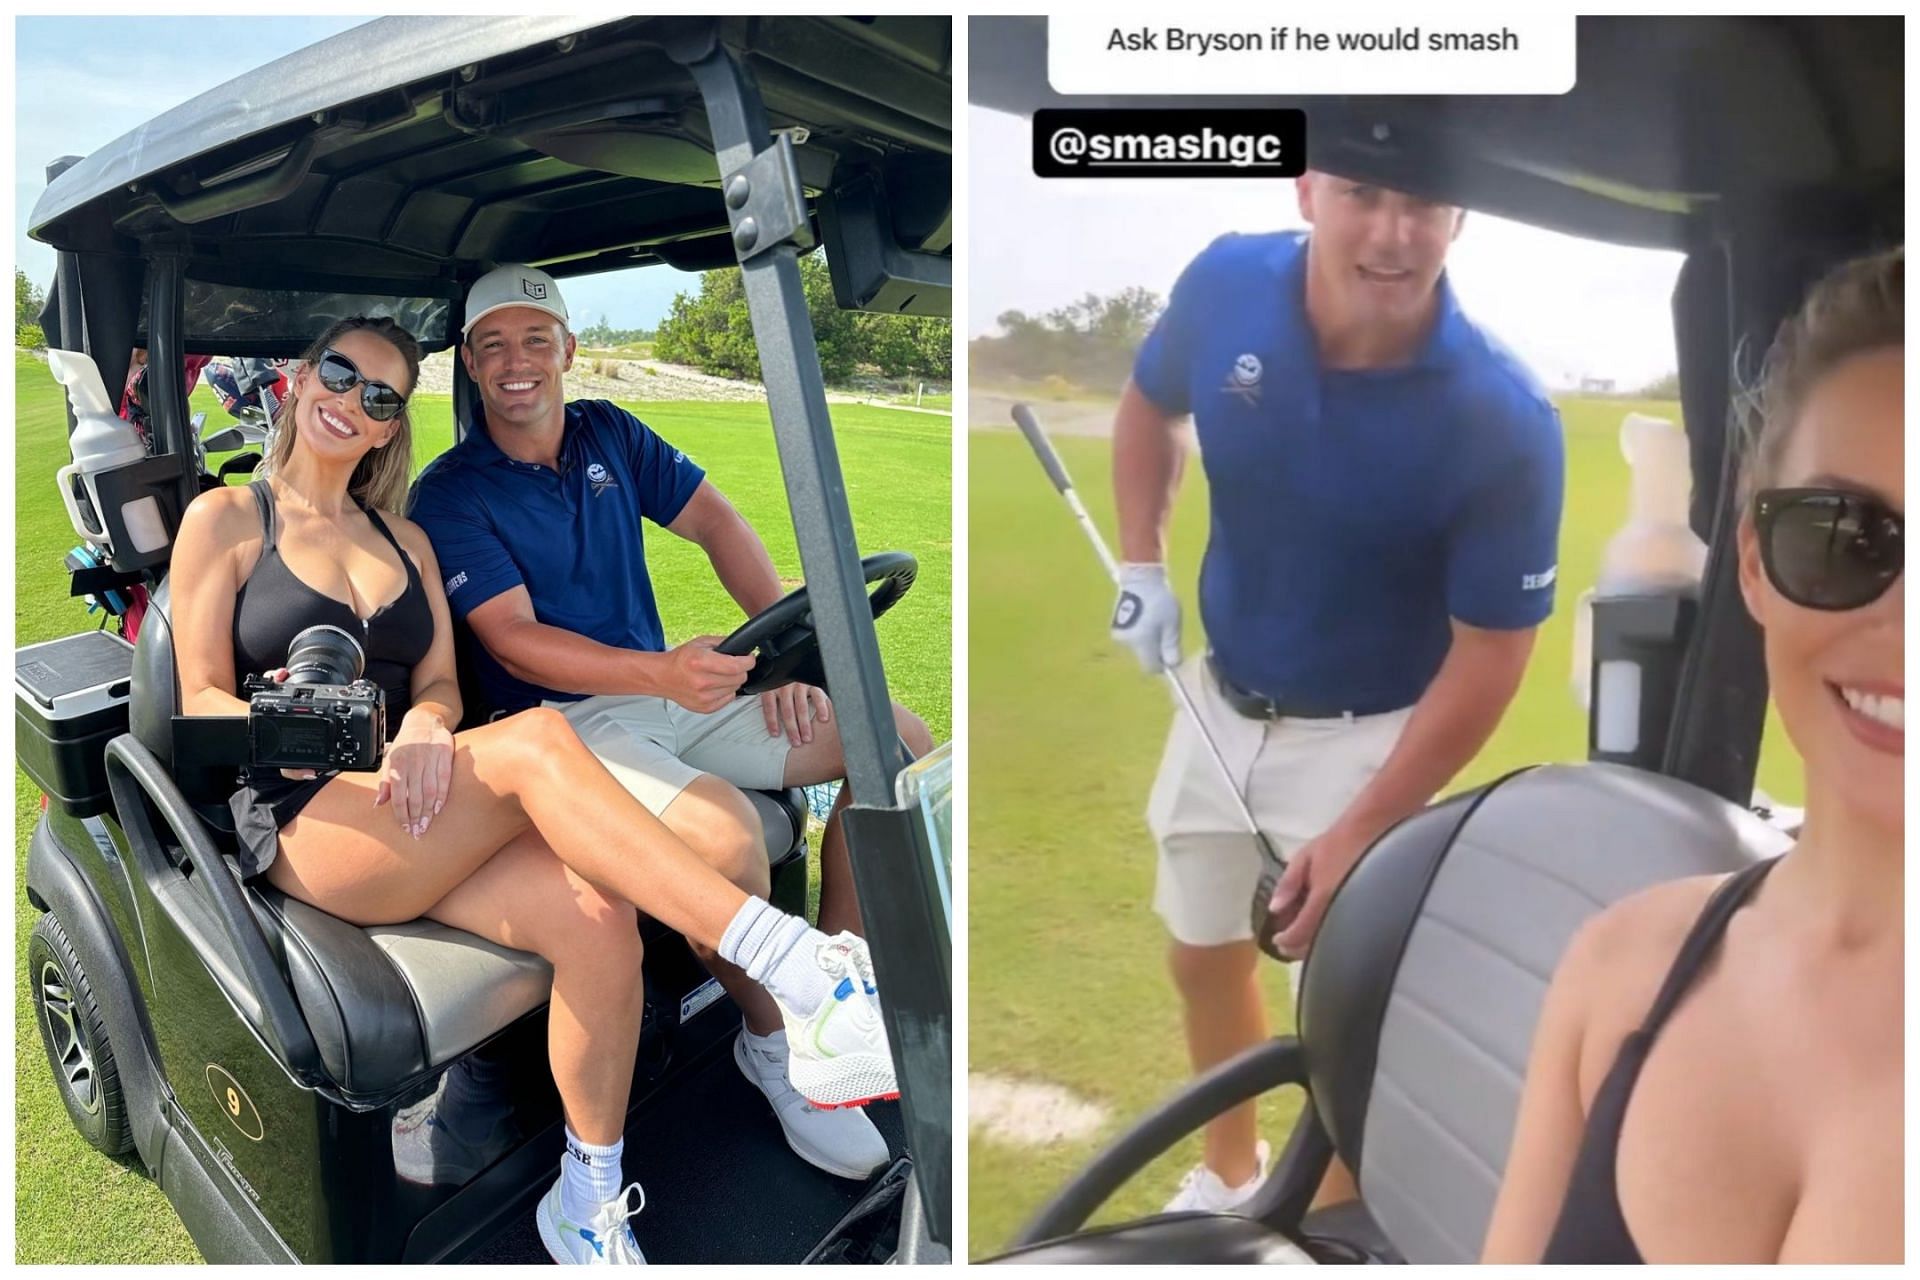 Paige Spiranac and Bryson DeChambeau recently played a round of golf